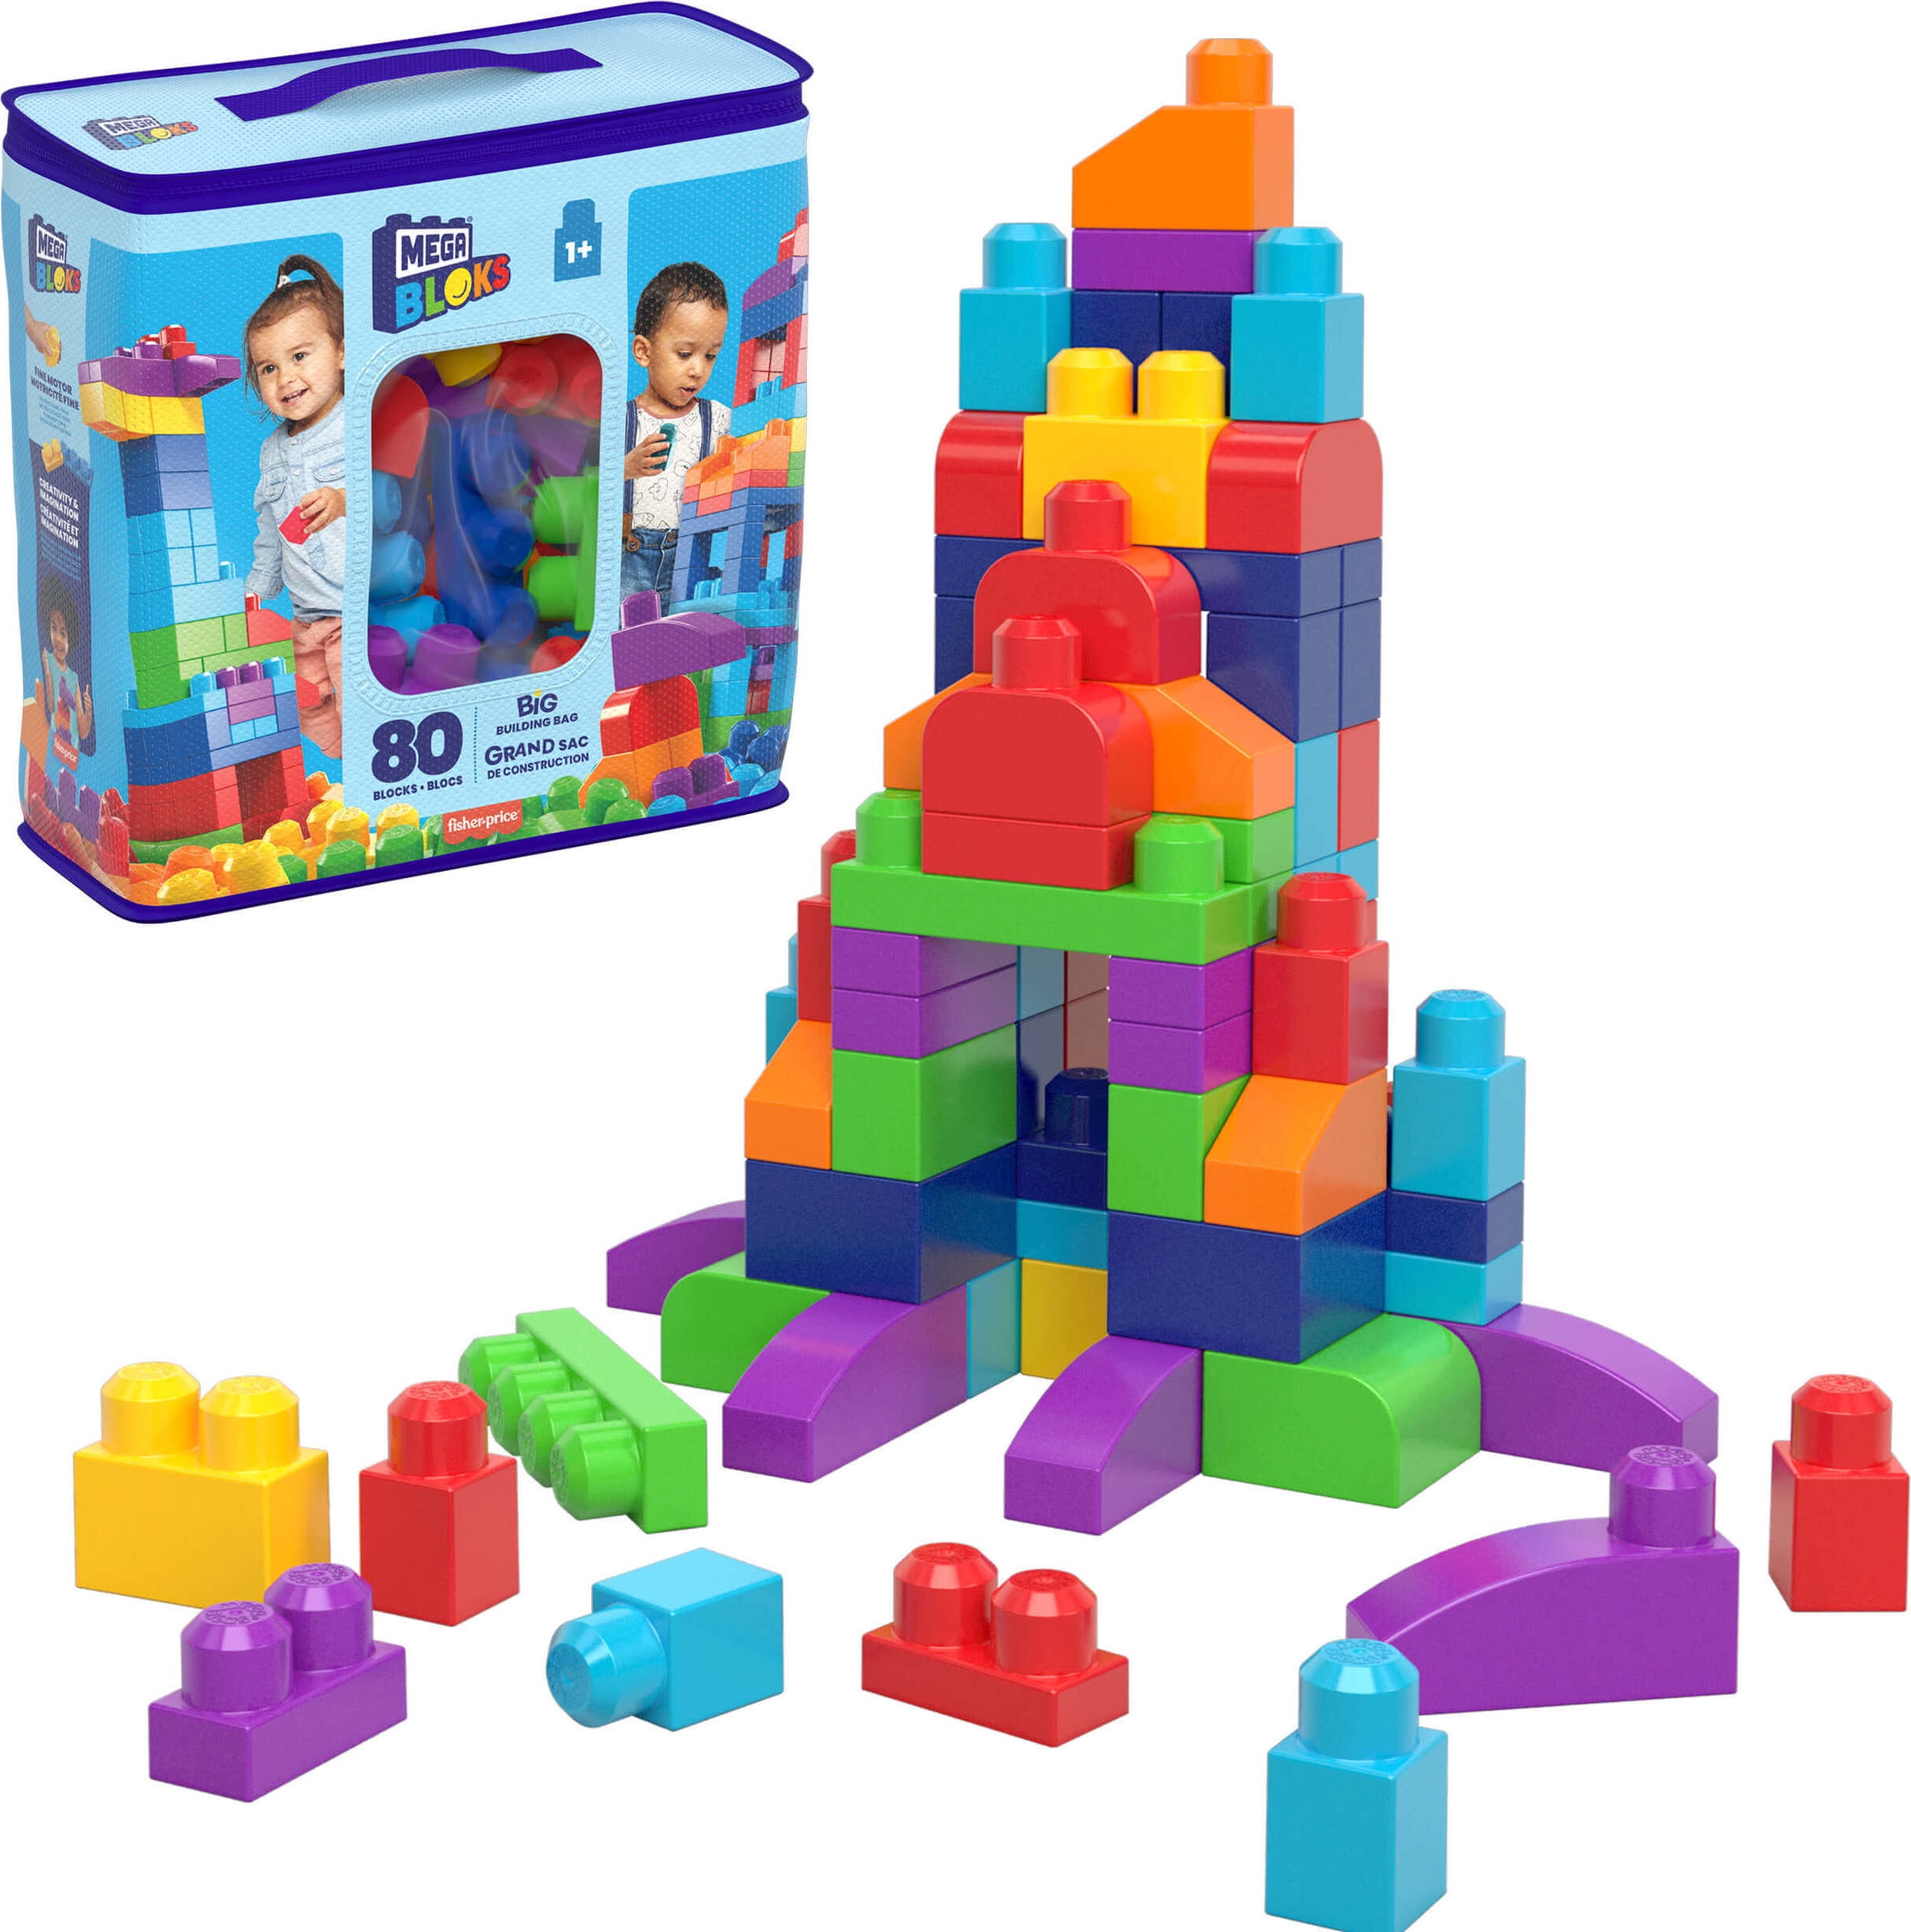 Vacante esposa Ortografía MEGA BLOKS Fisher-Price Toy Blocks Blue Big Building Bag with Storage (80  Pieces) for Toddler - Walmart.com